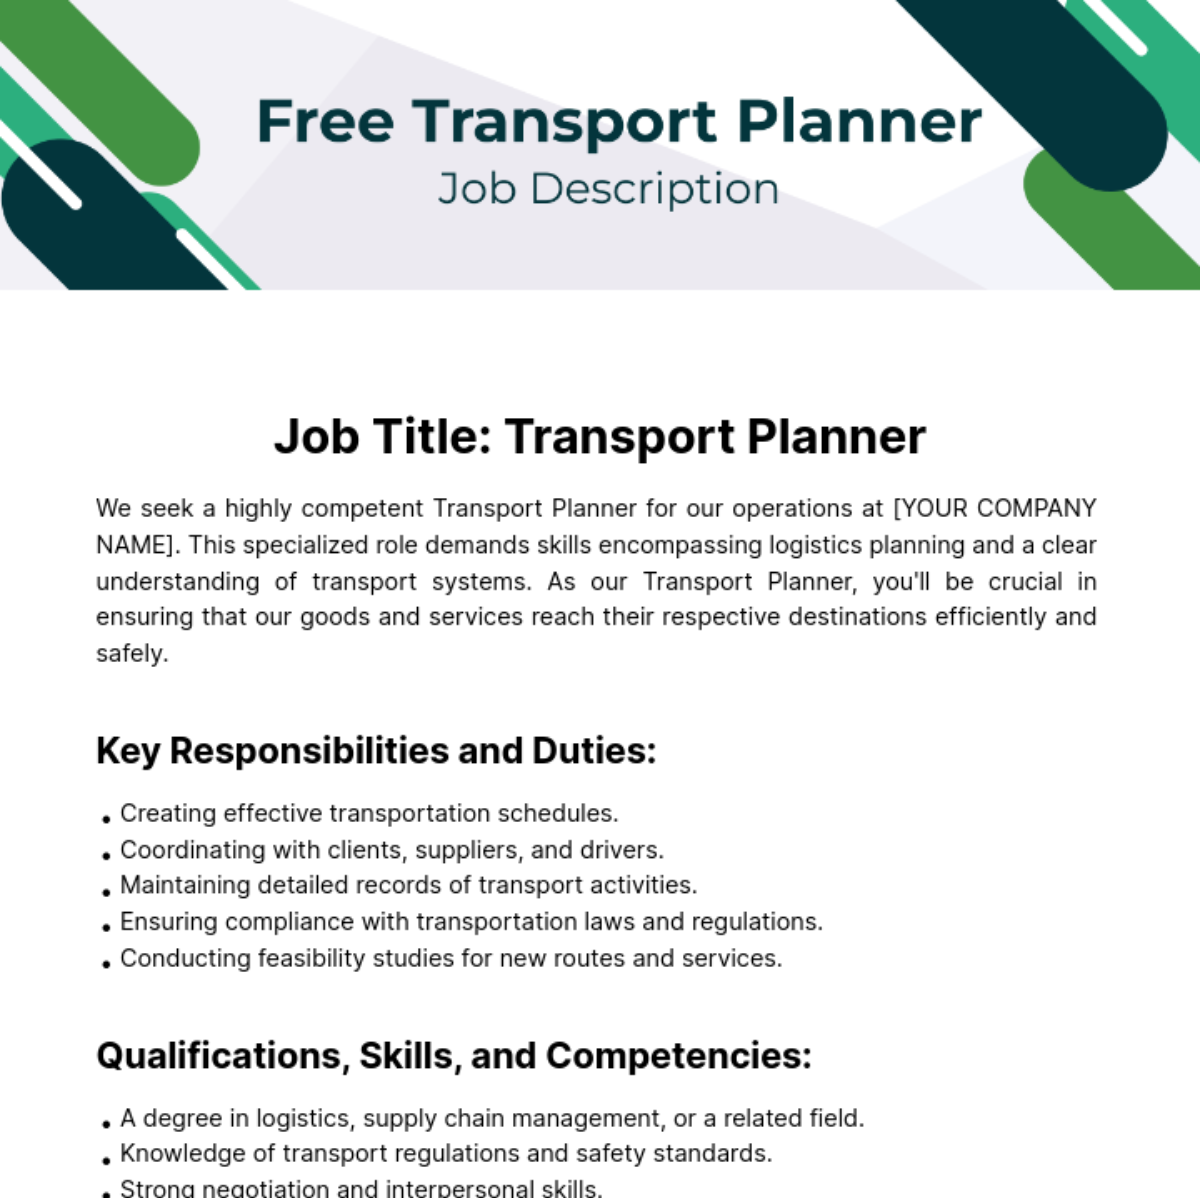 Transport Planner Job Description Template